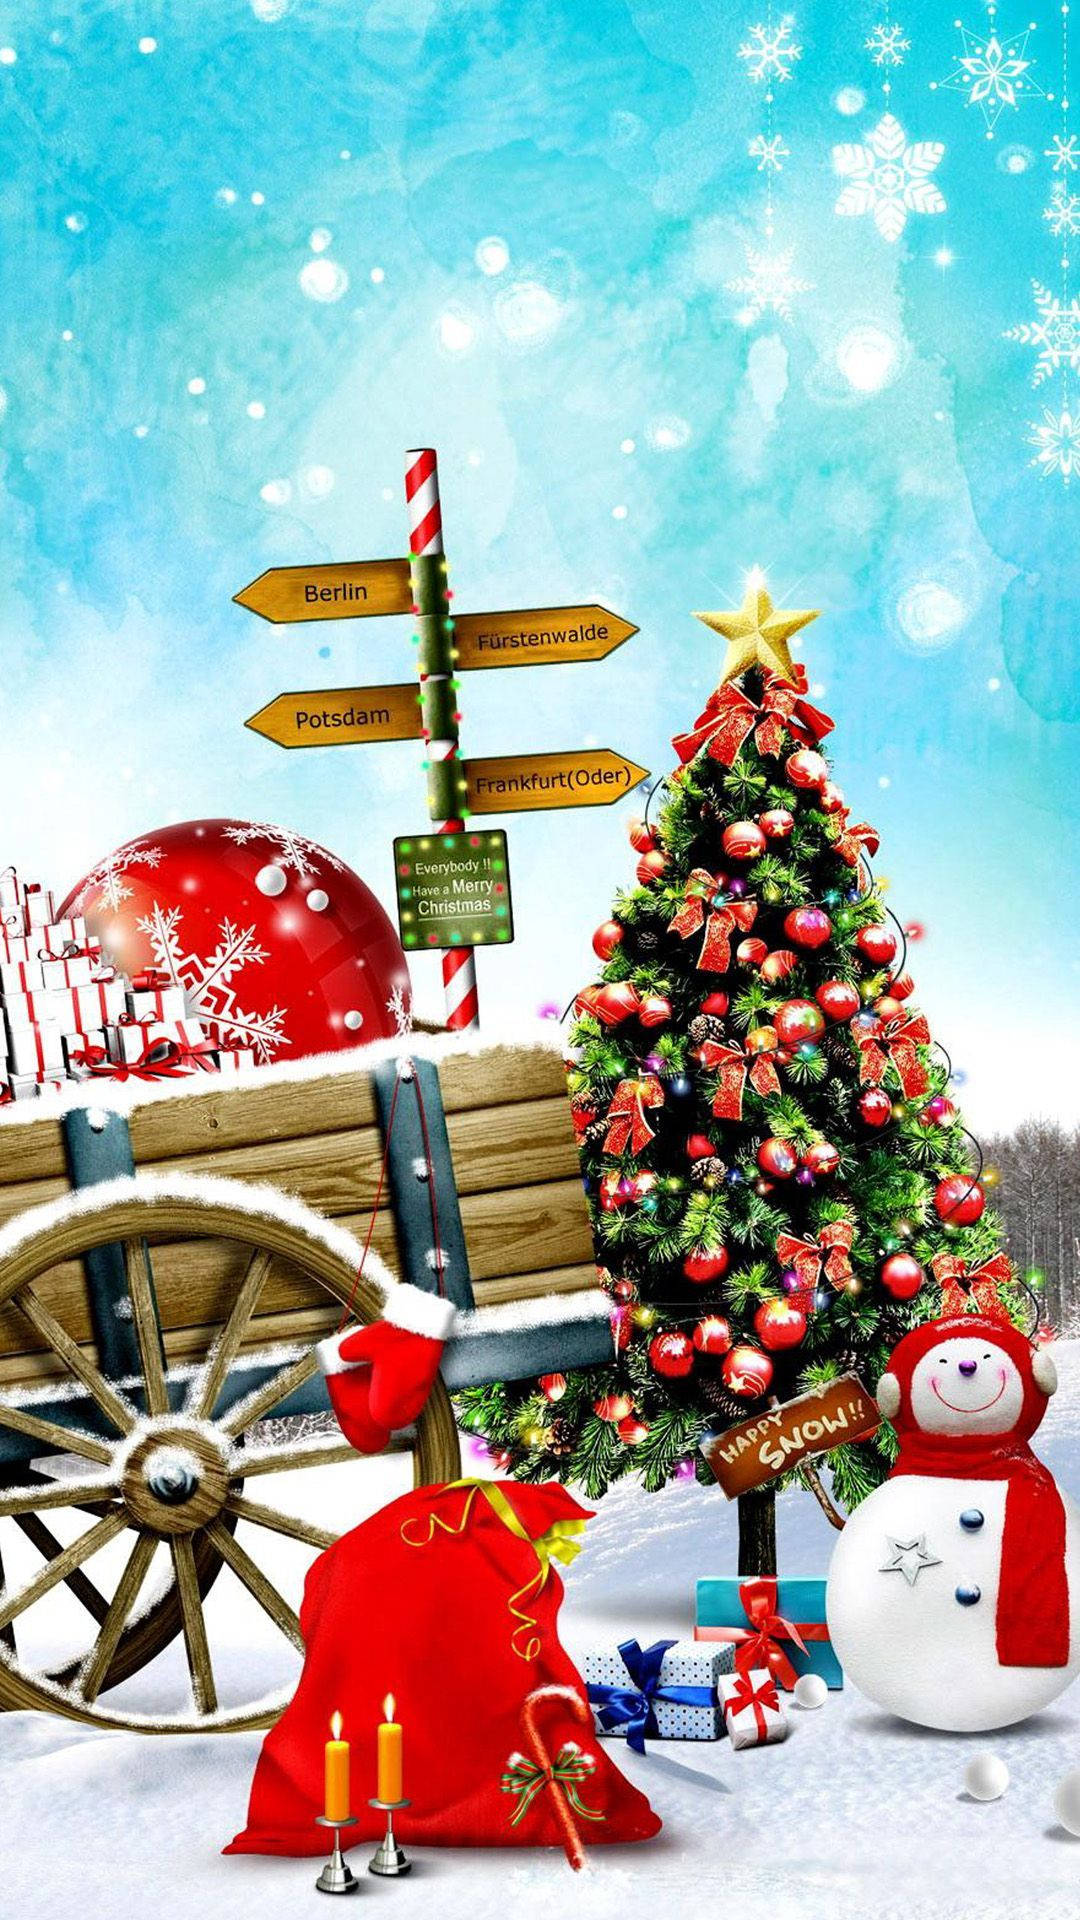 Download Festive Christmas Phone Wallpaper